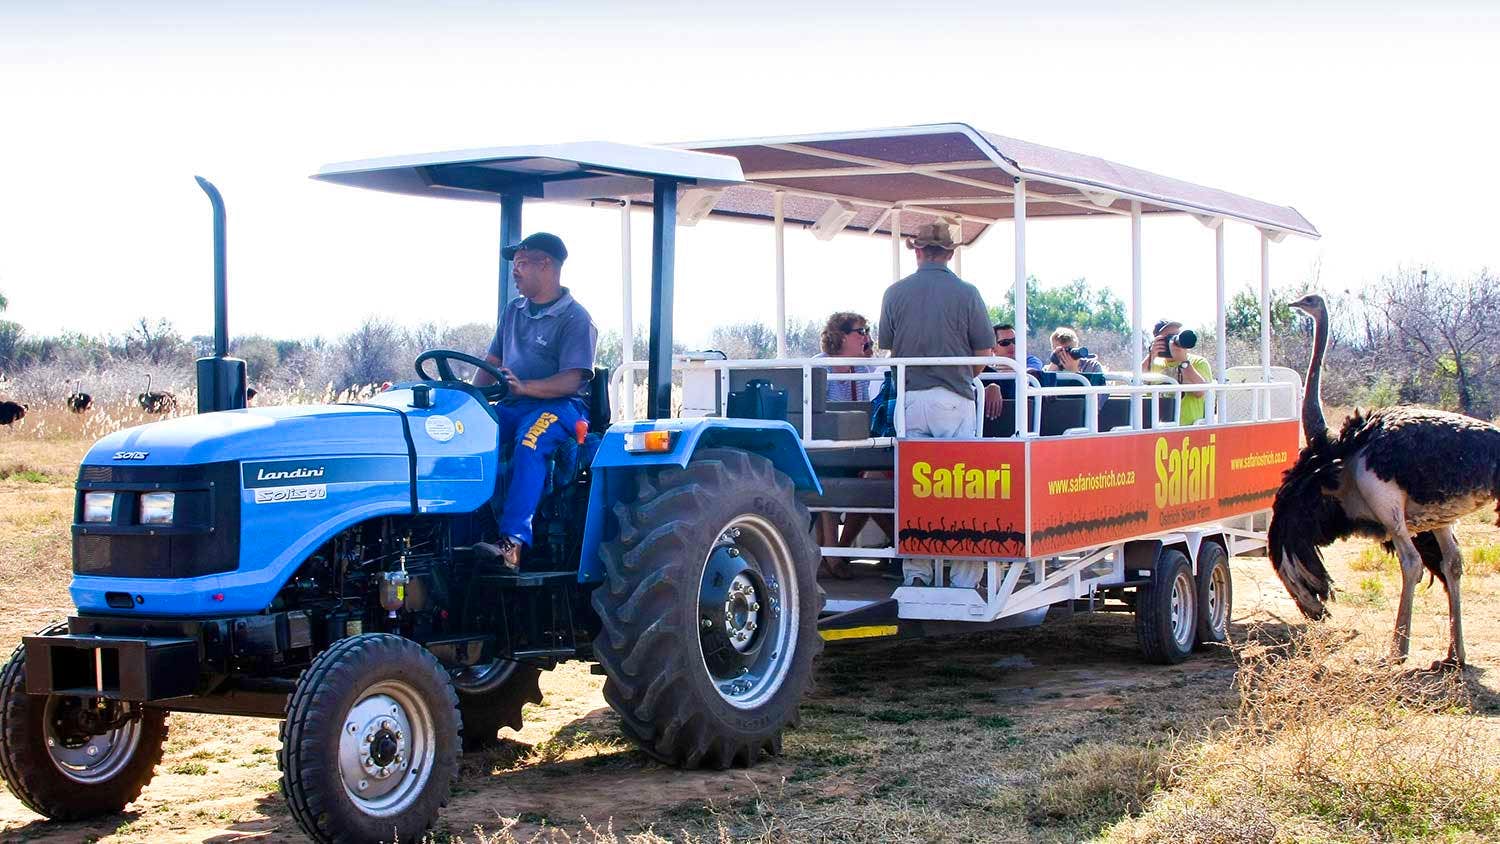 Tractor Tour-Safari Ostrich Show Farm